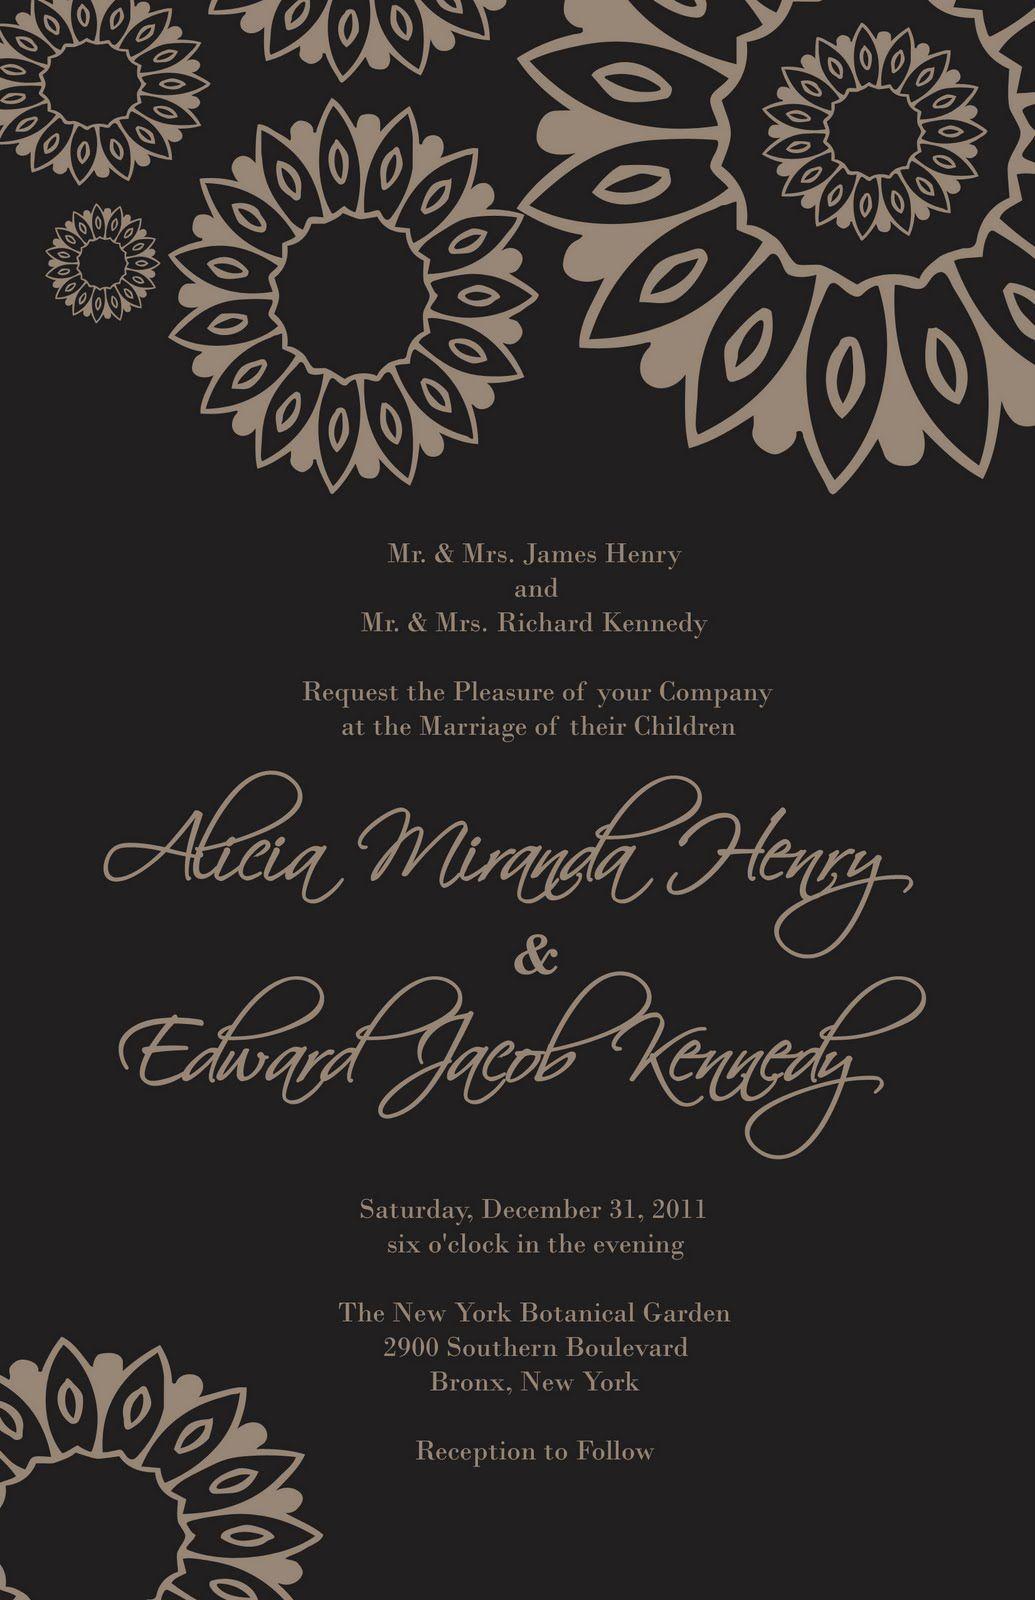 Flower Power Company Logo - Flower Power Design Wedding Invitation I used Adobe Photoshop Shapes ...